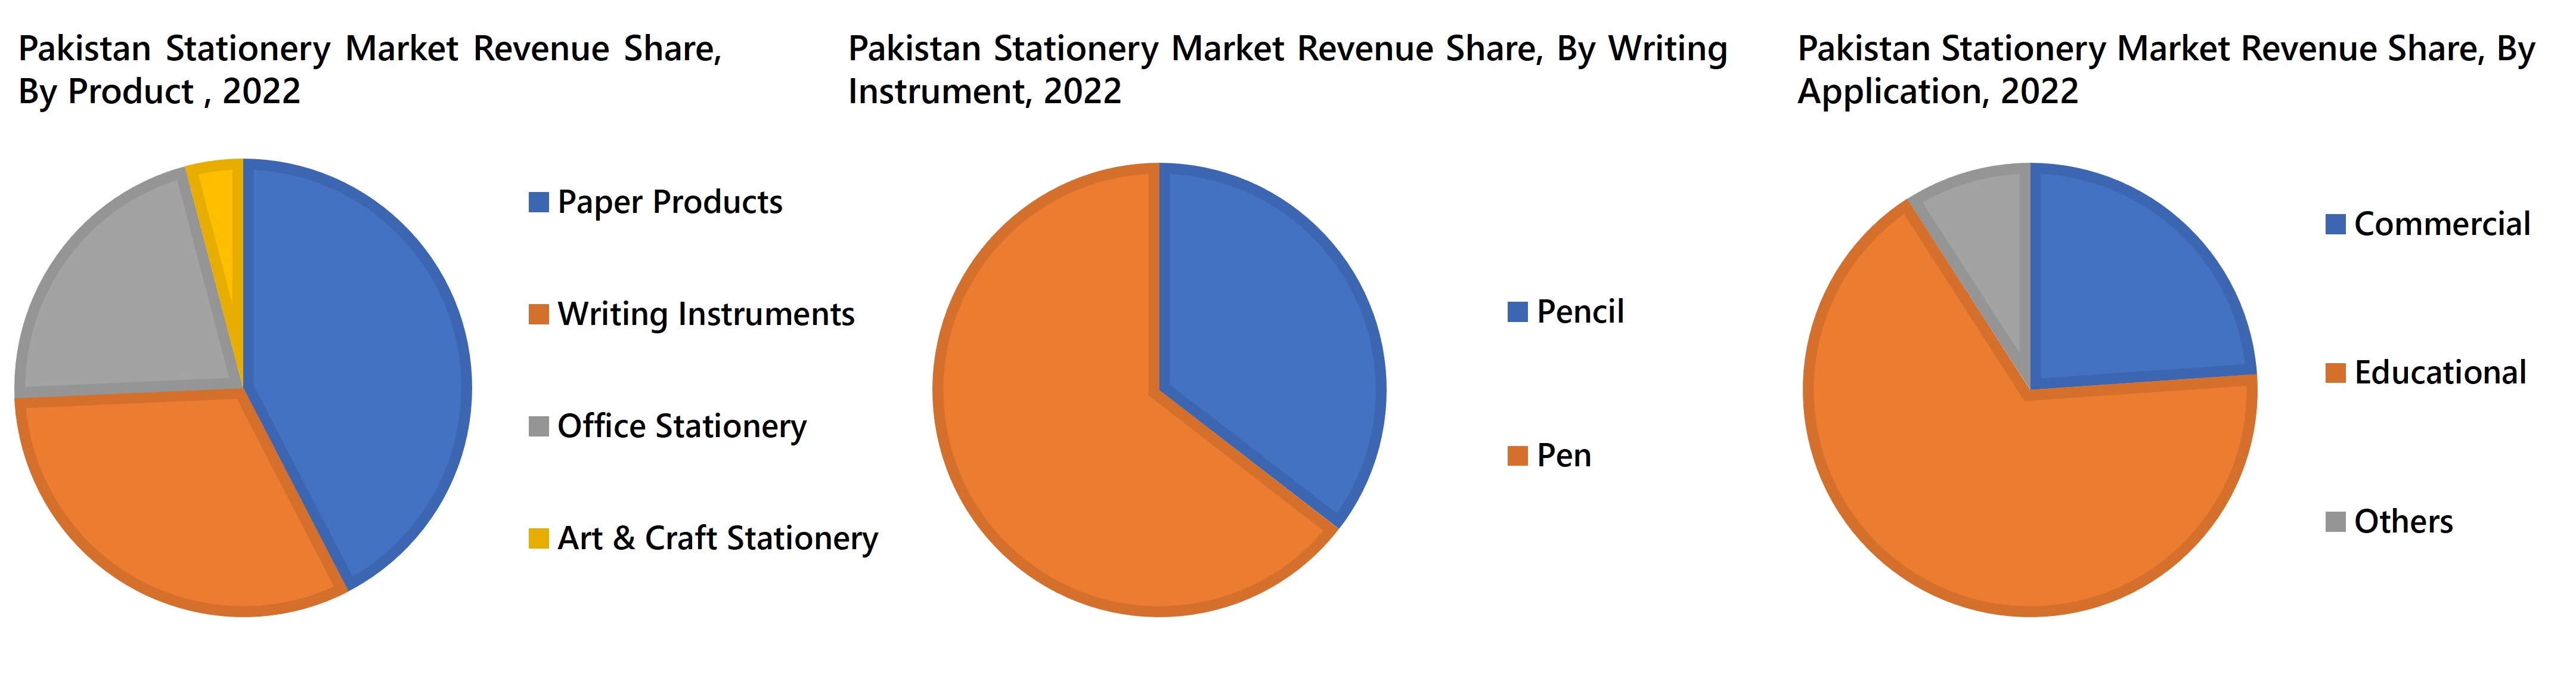 Pakistan Stationery Market Revenue Share